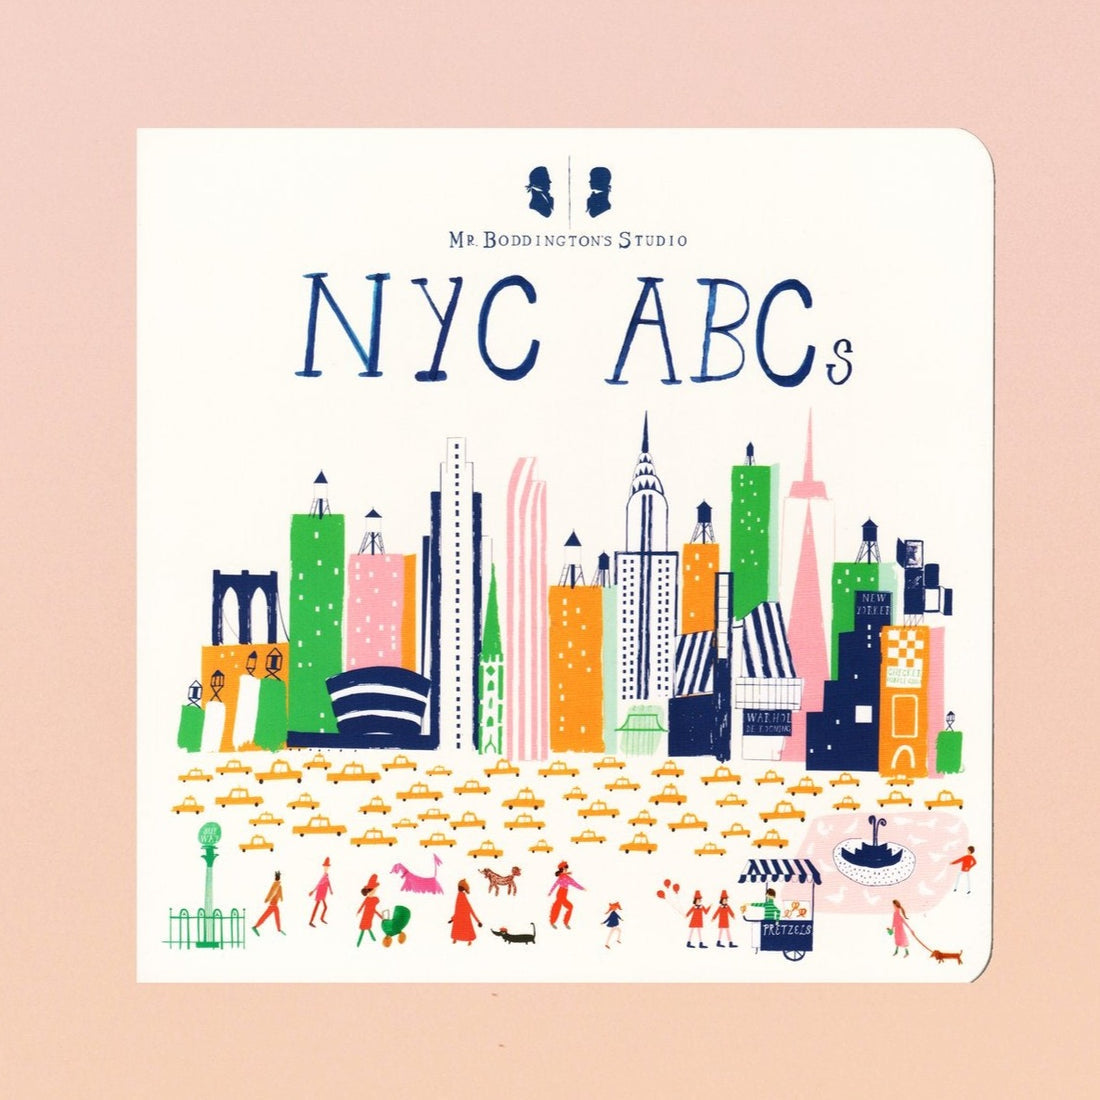 Mr Boddington's Studio NYC ABCs book